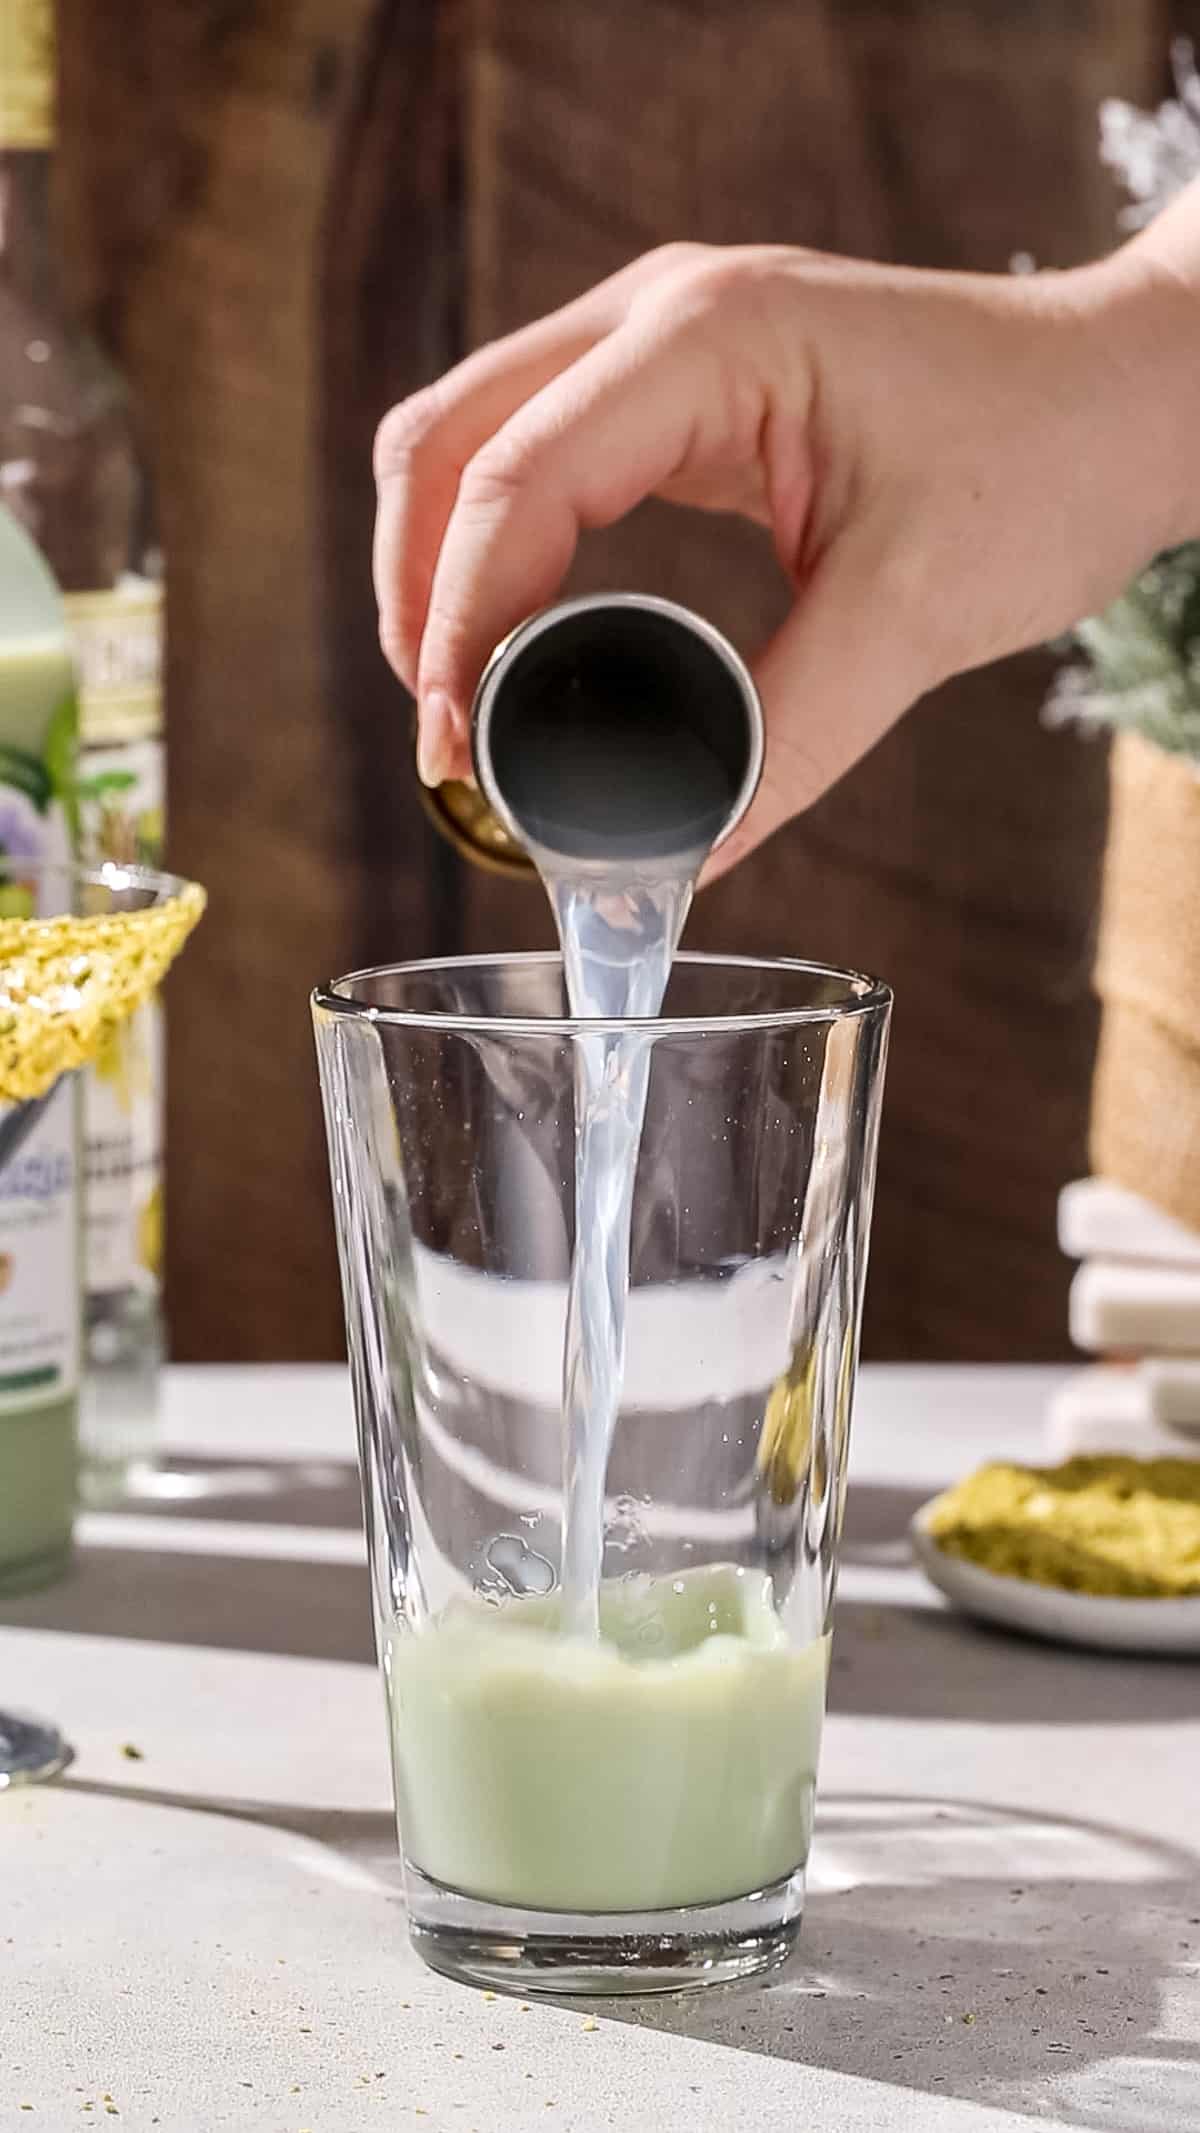 Hand adding vanilla vodka to a cocktail shaker.